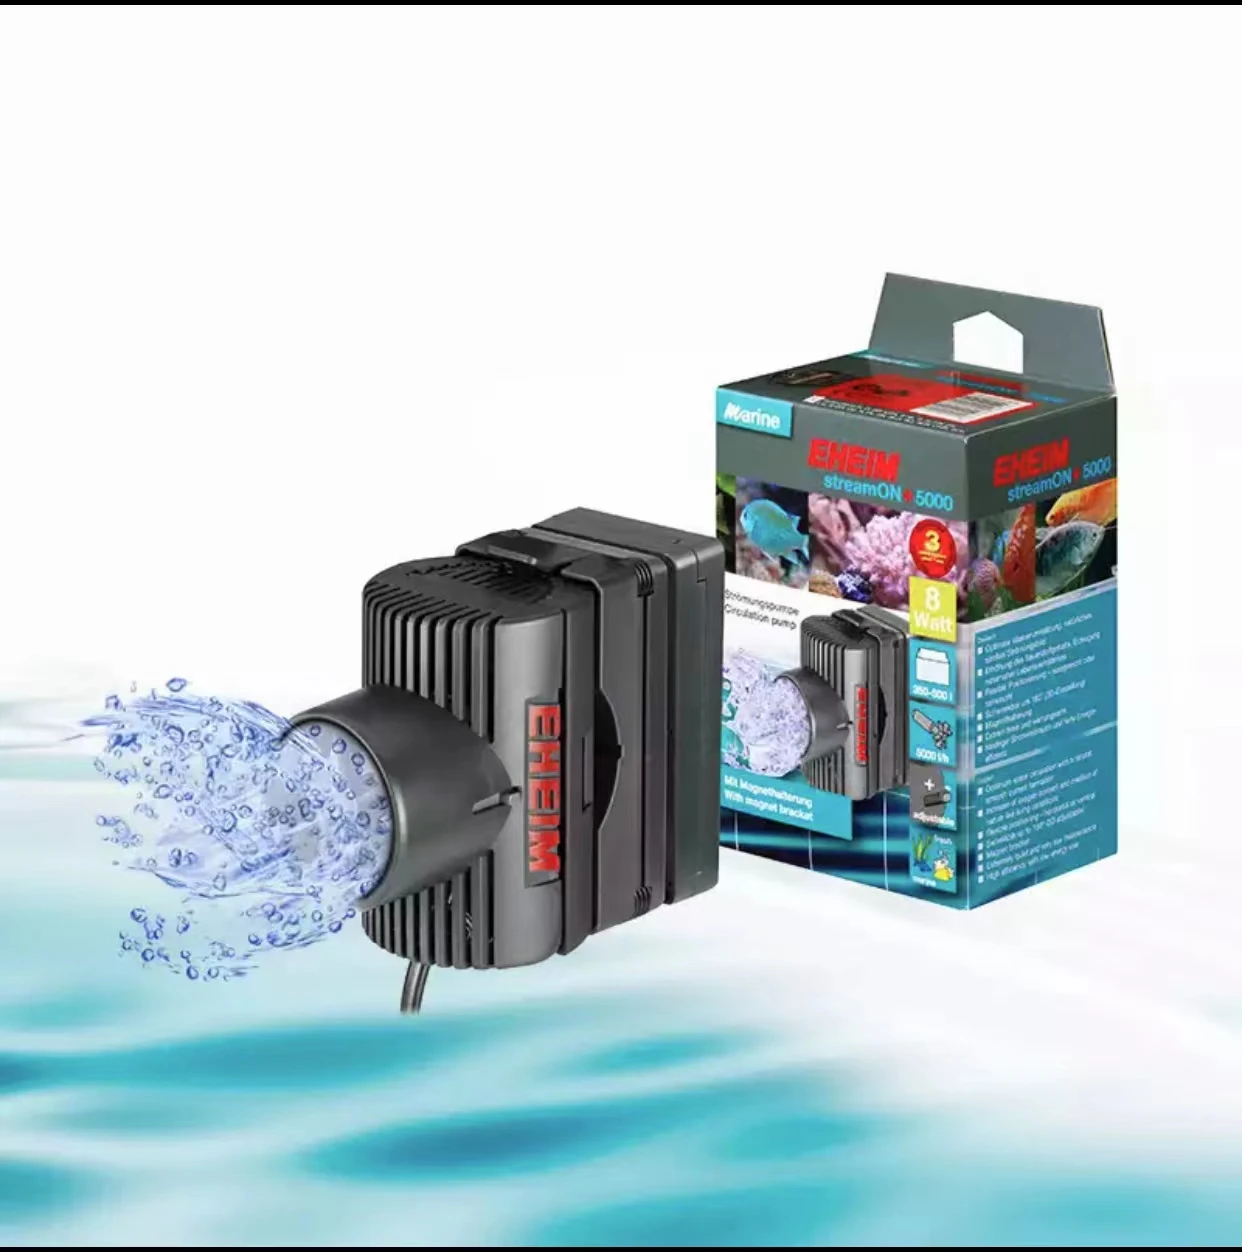 Eheim wavemaker streamON + 5000 L/H Pump with Magnet for fish tank seawater saltwater marine coral reef aquarium ultra quiet